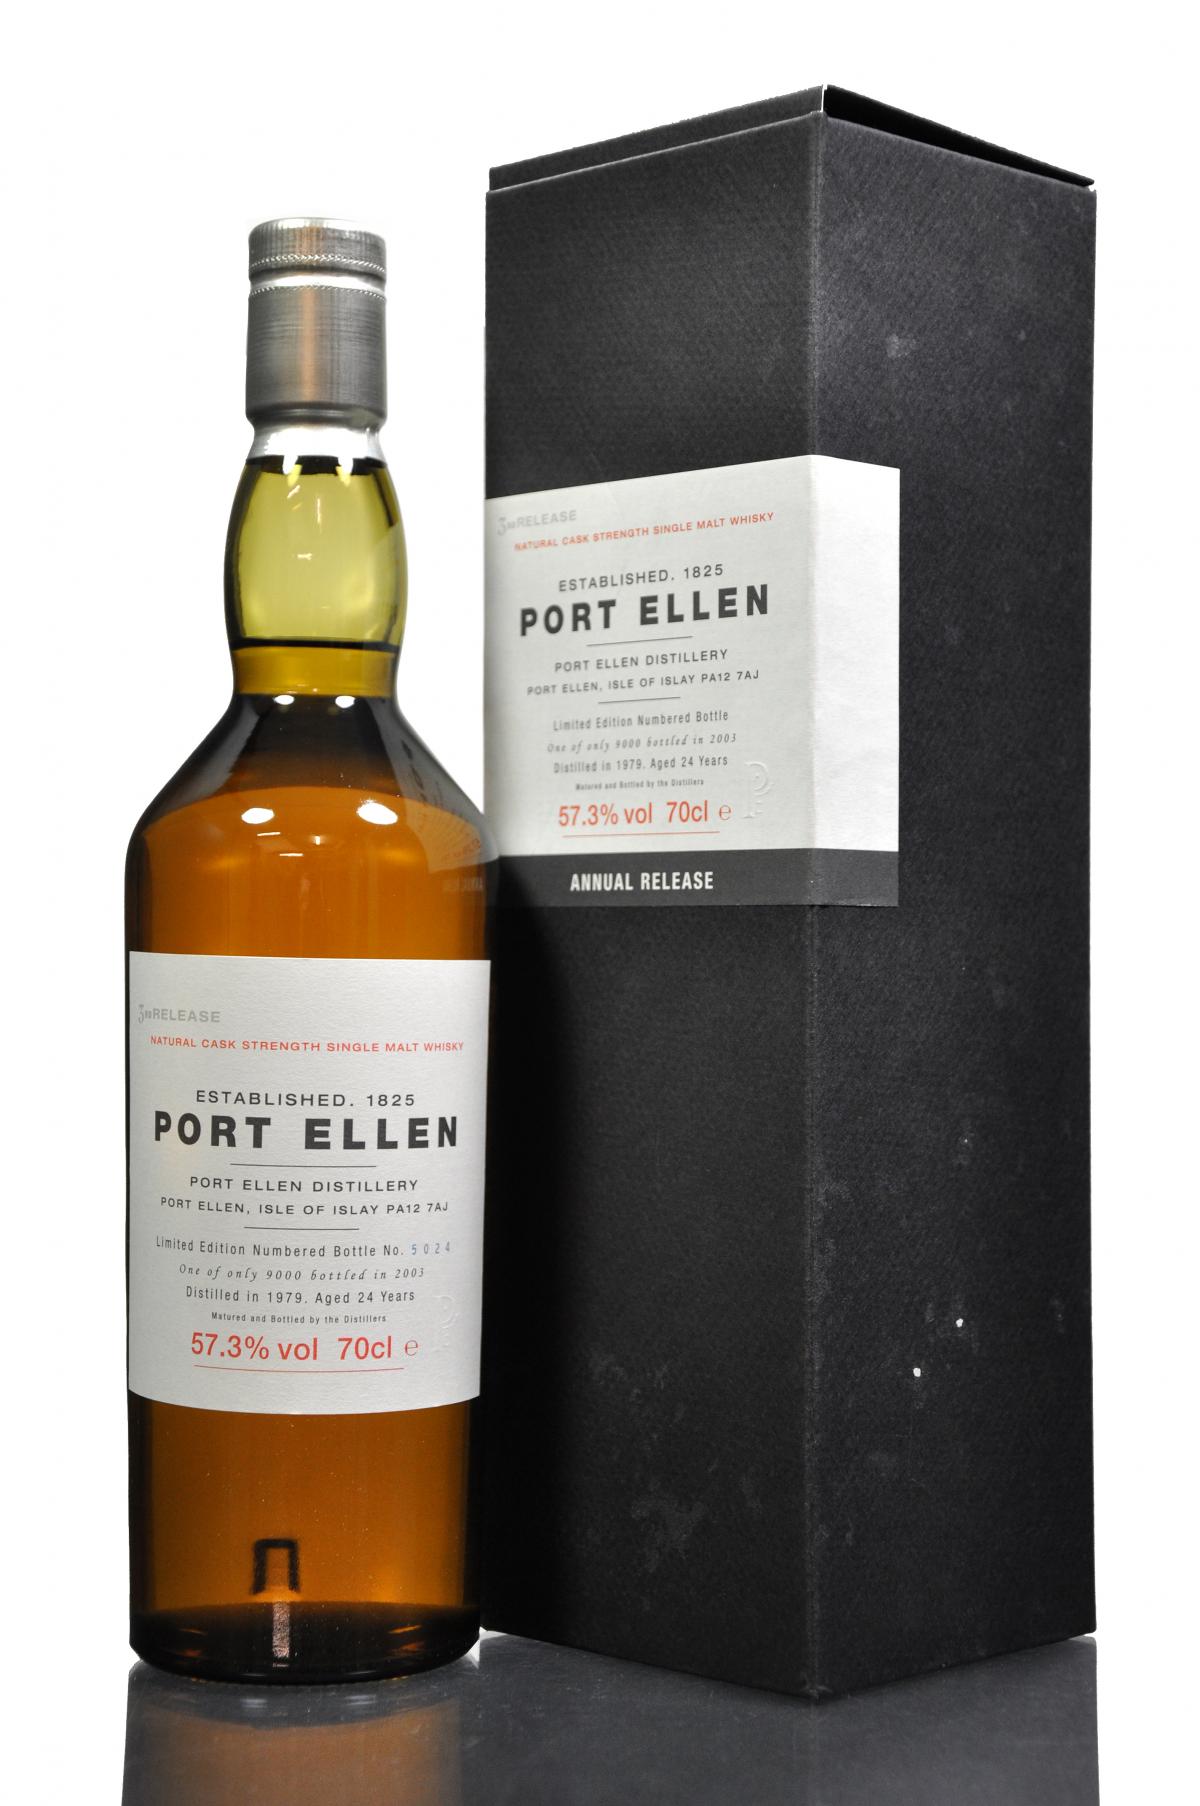 Port Ellen 1979-2003 - 24 Year Old - 3rd Release